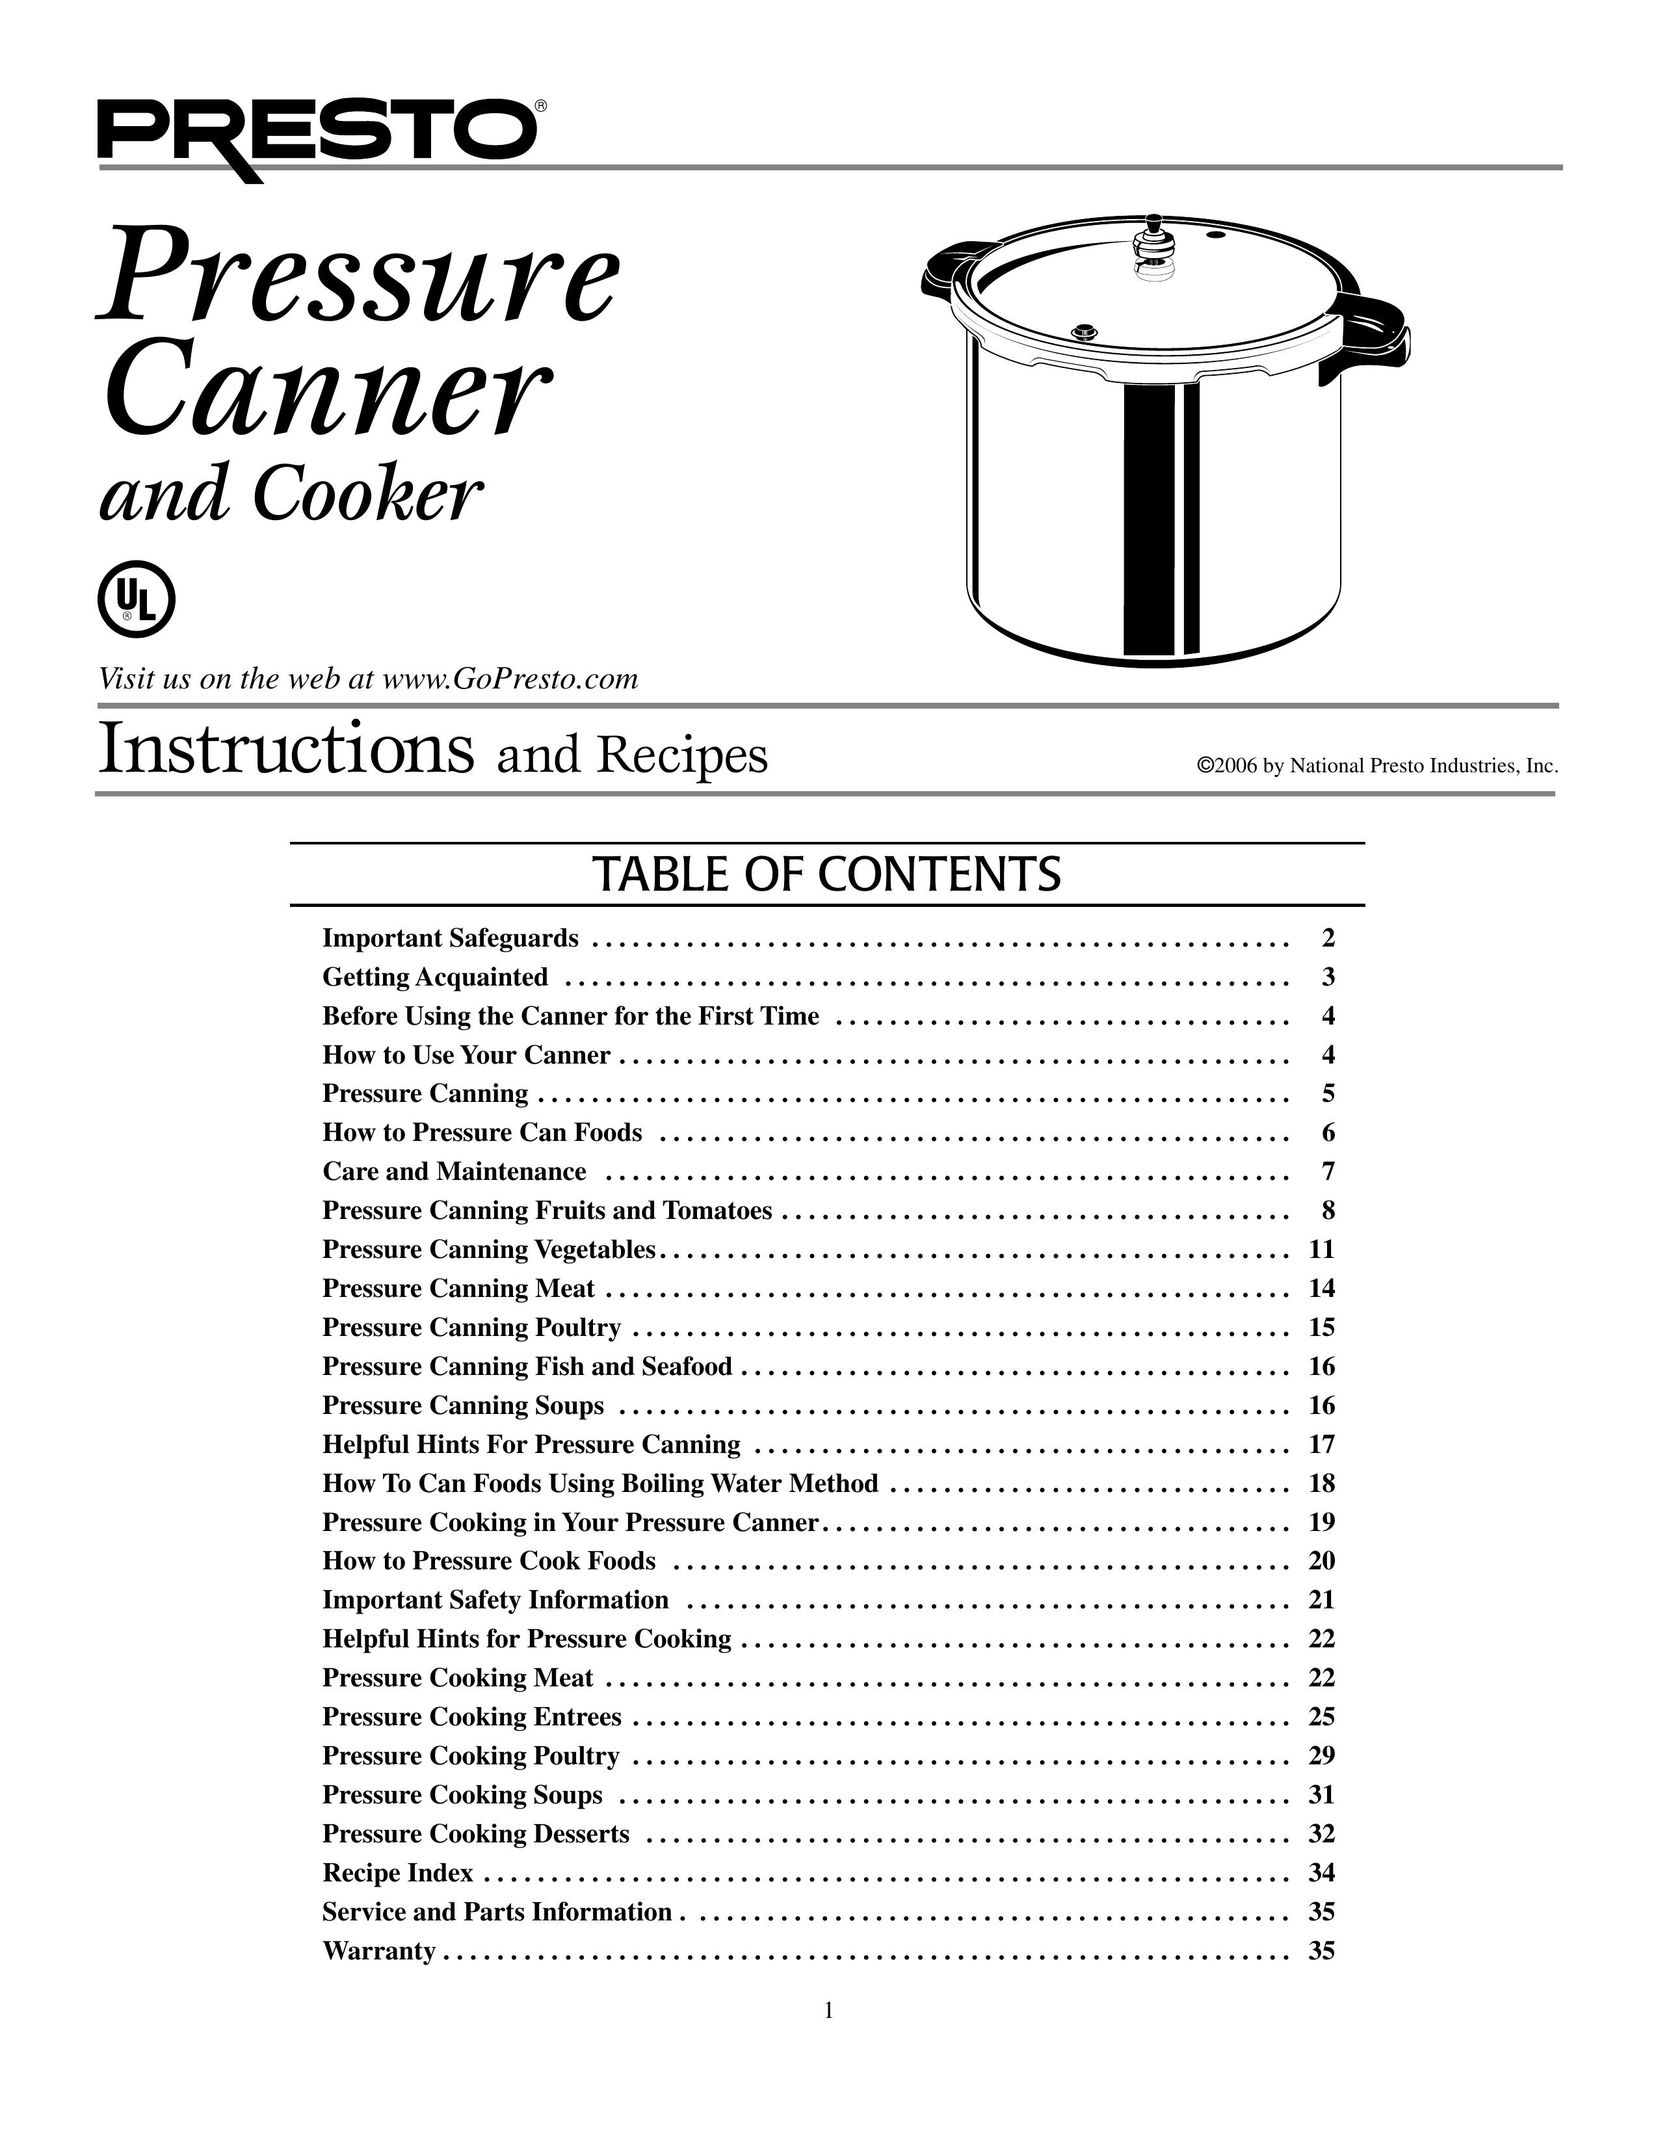 Presto Pressure Canner and Cooker Electric Pressure Cooker User Manual